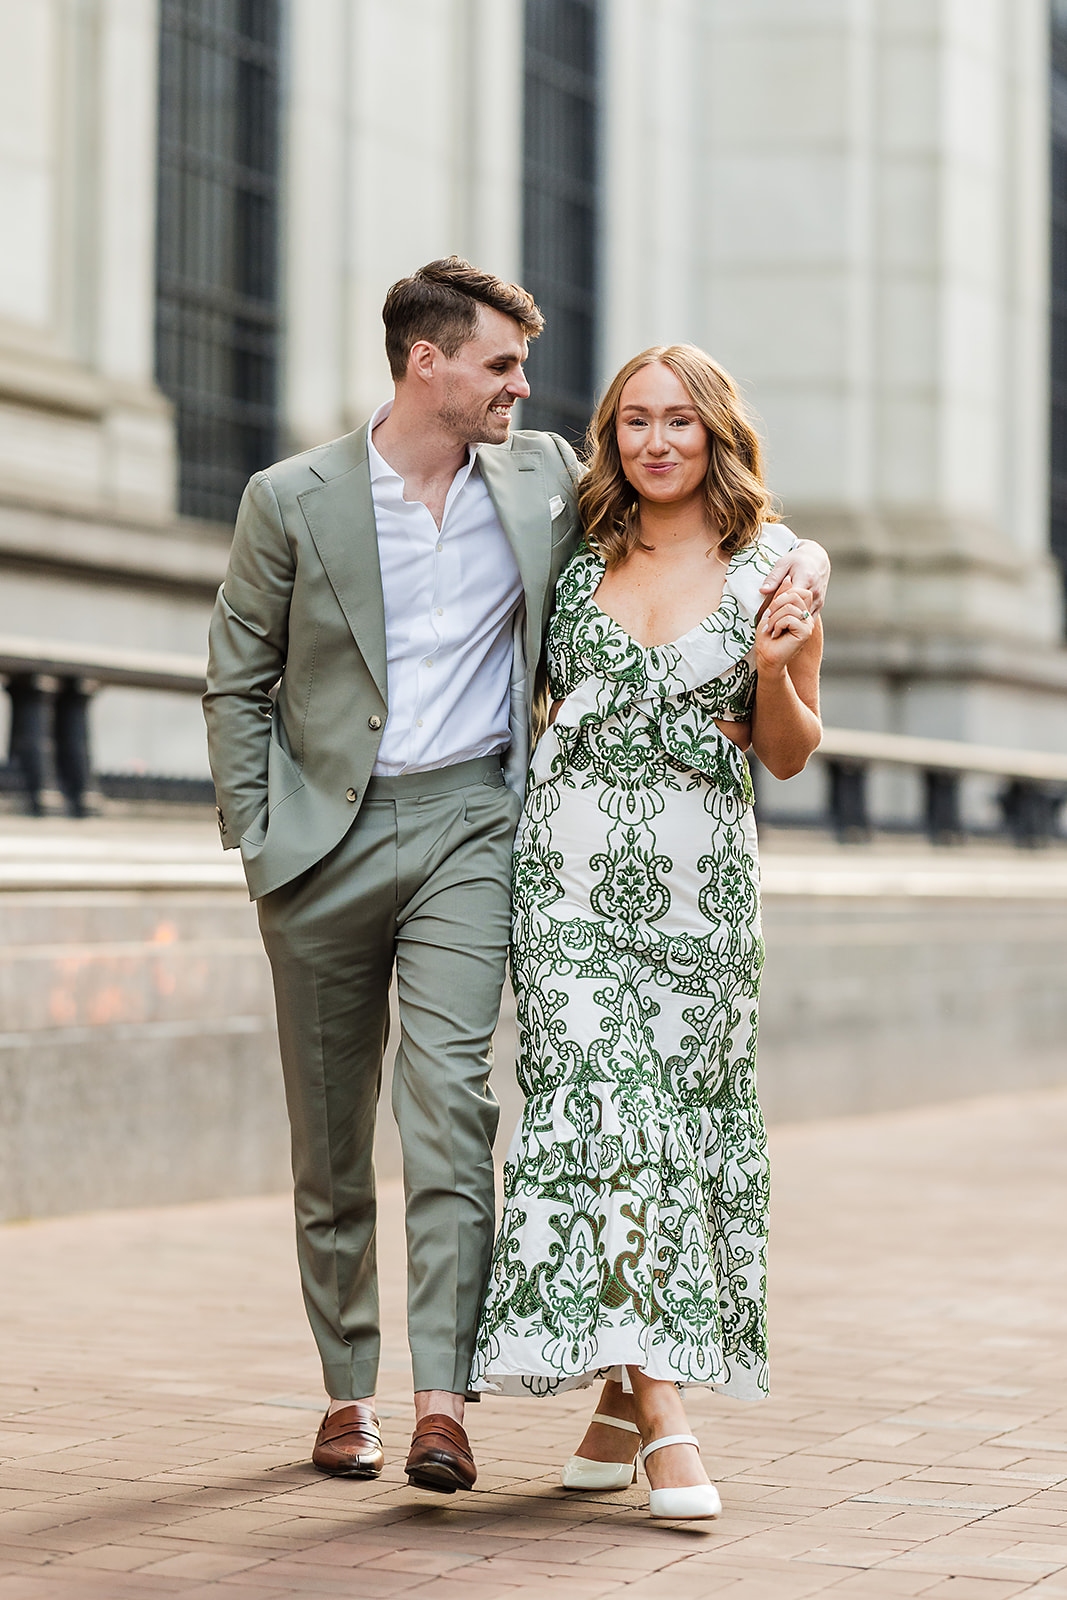 Romantic vibey engagement session photos in Philadelphia center city